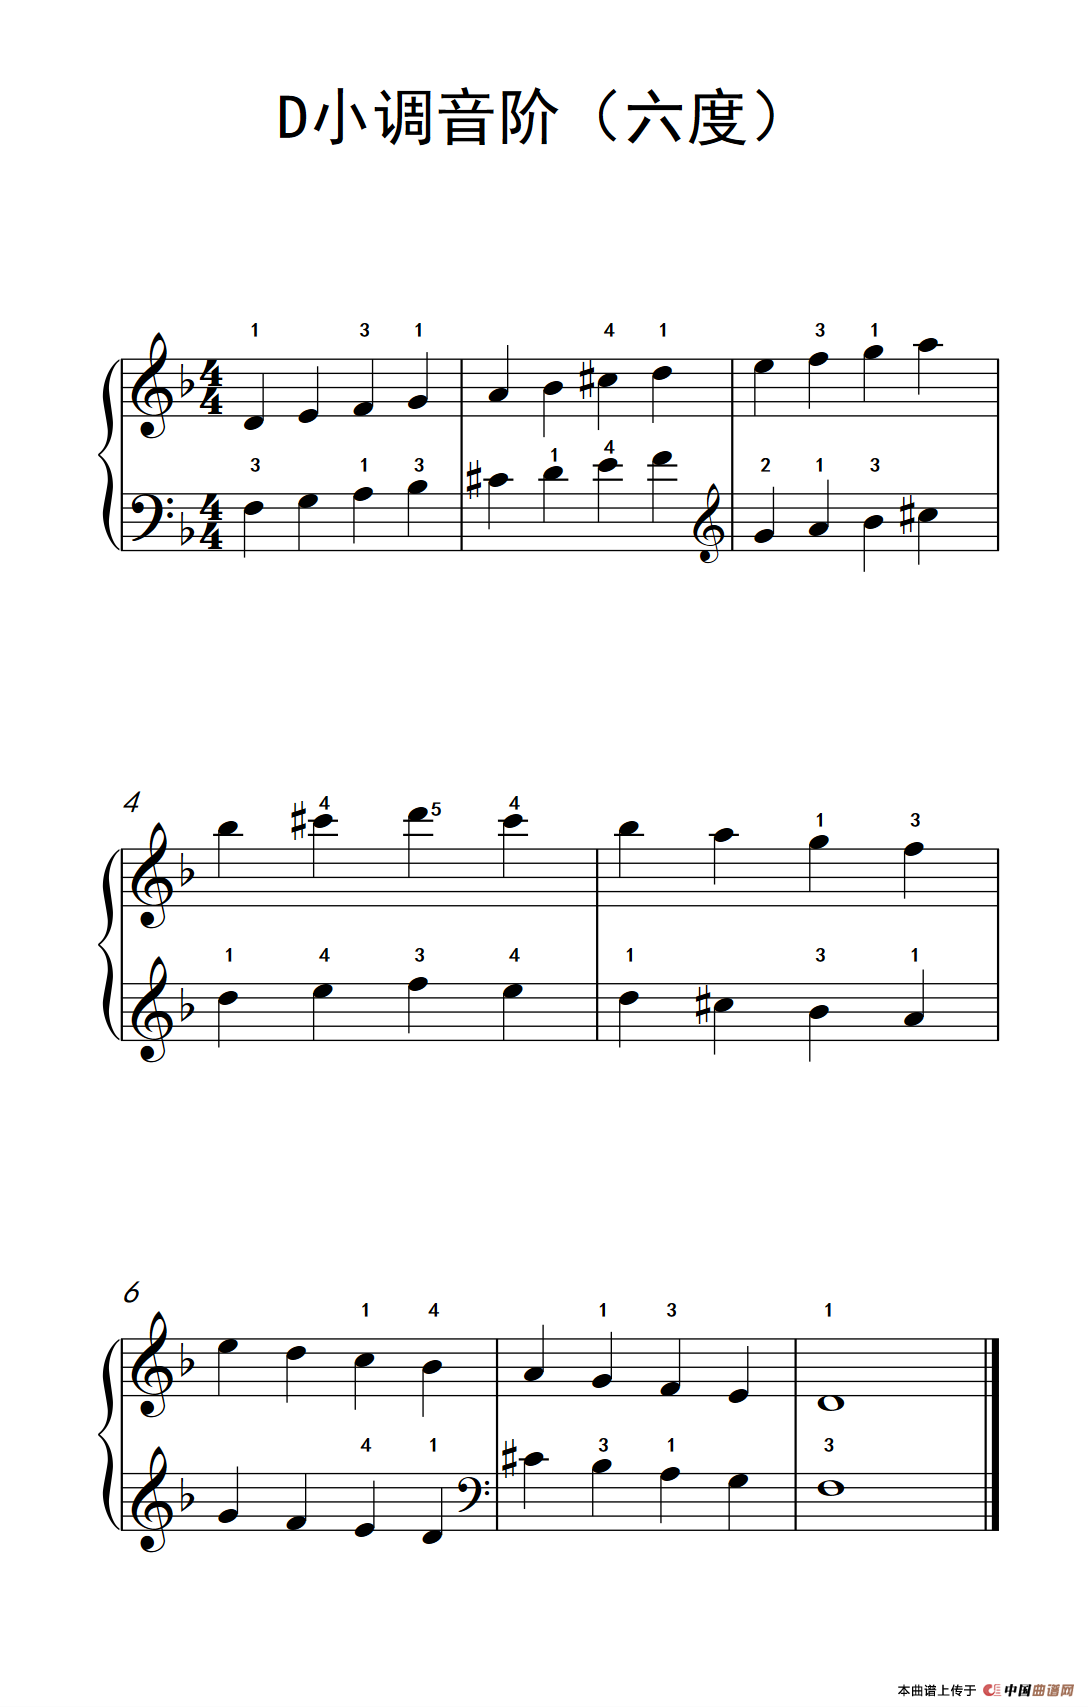 D小调音阶(六度)(儿童钢琴练习曲)